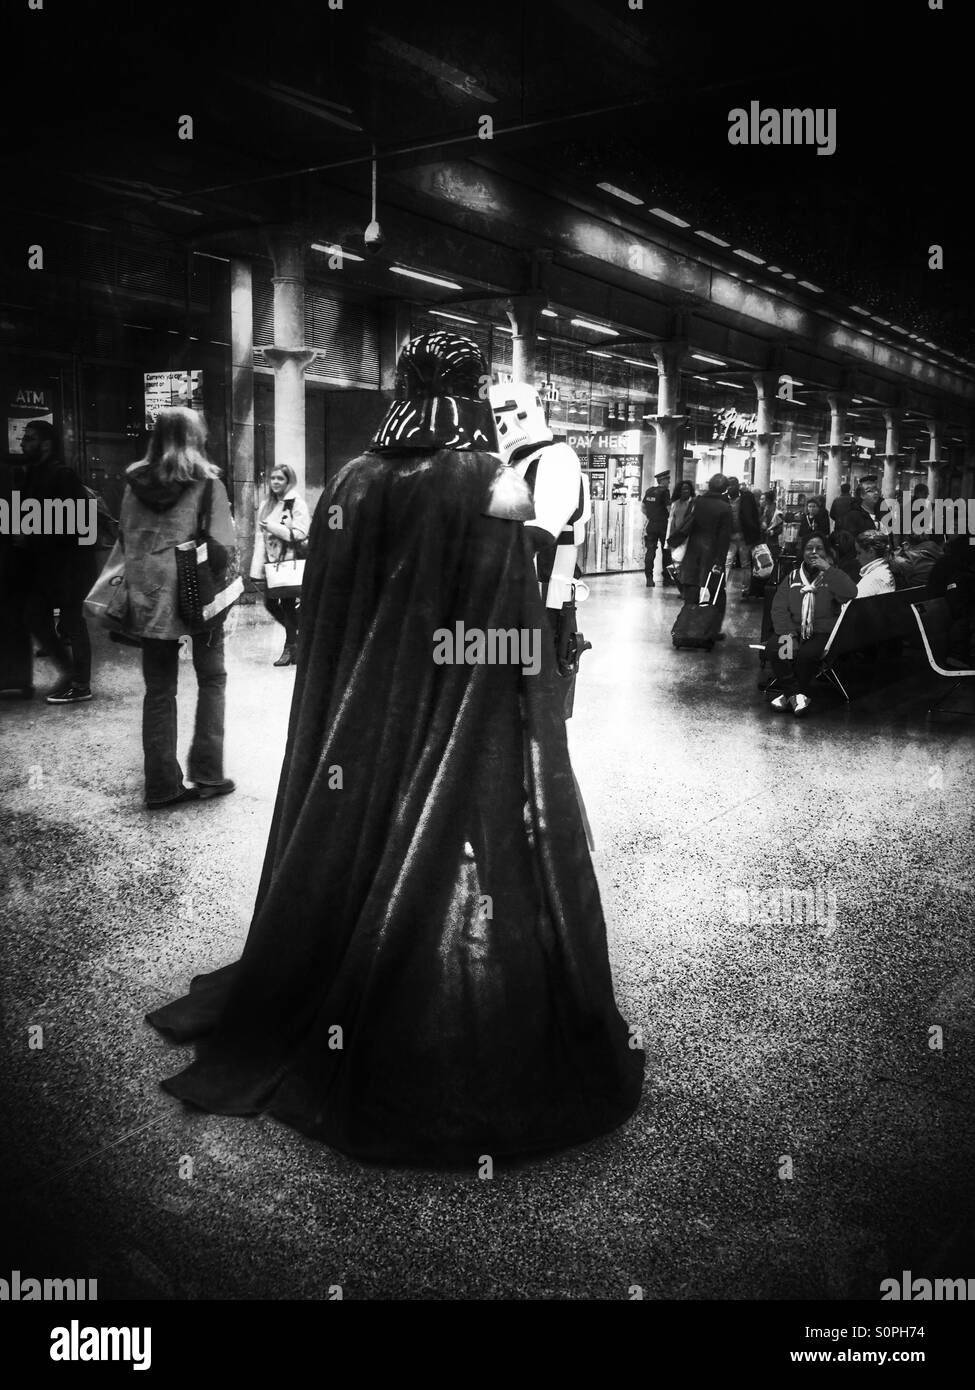 Man dressed up in Star Wars Darth Vader costume, St. Pancras International Station, Central London, England, United Kingdom, Europe Stock Photo